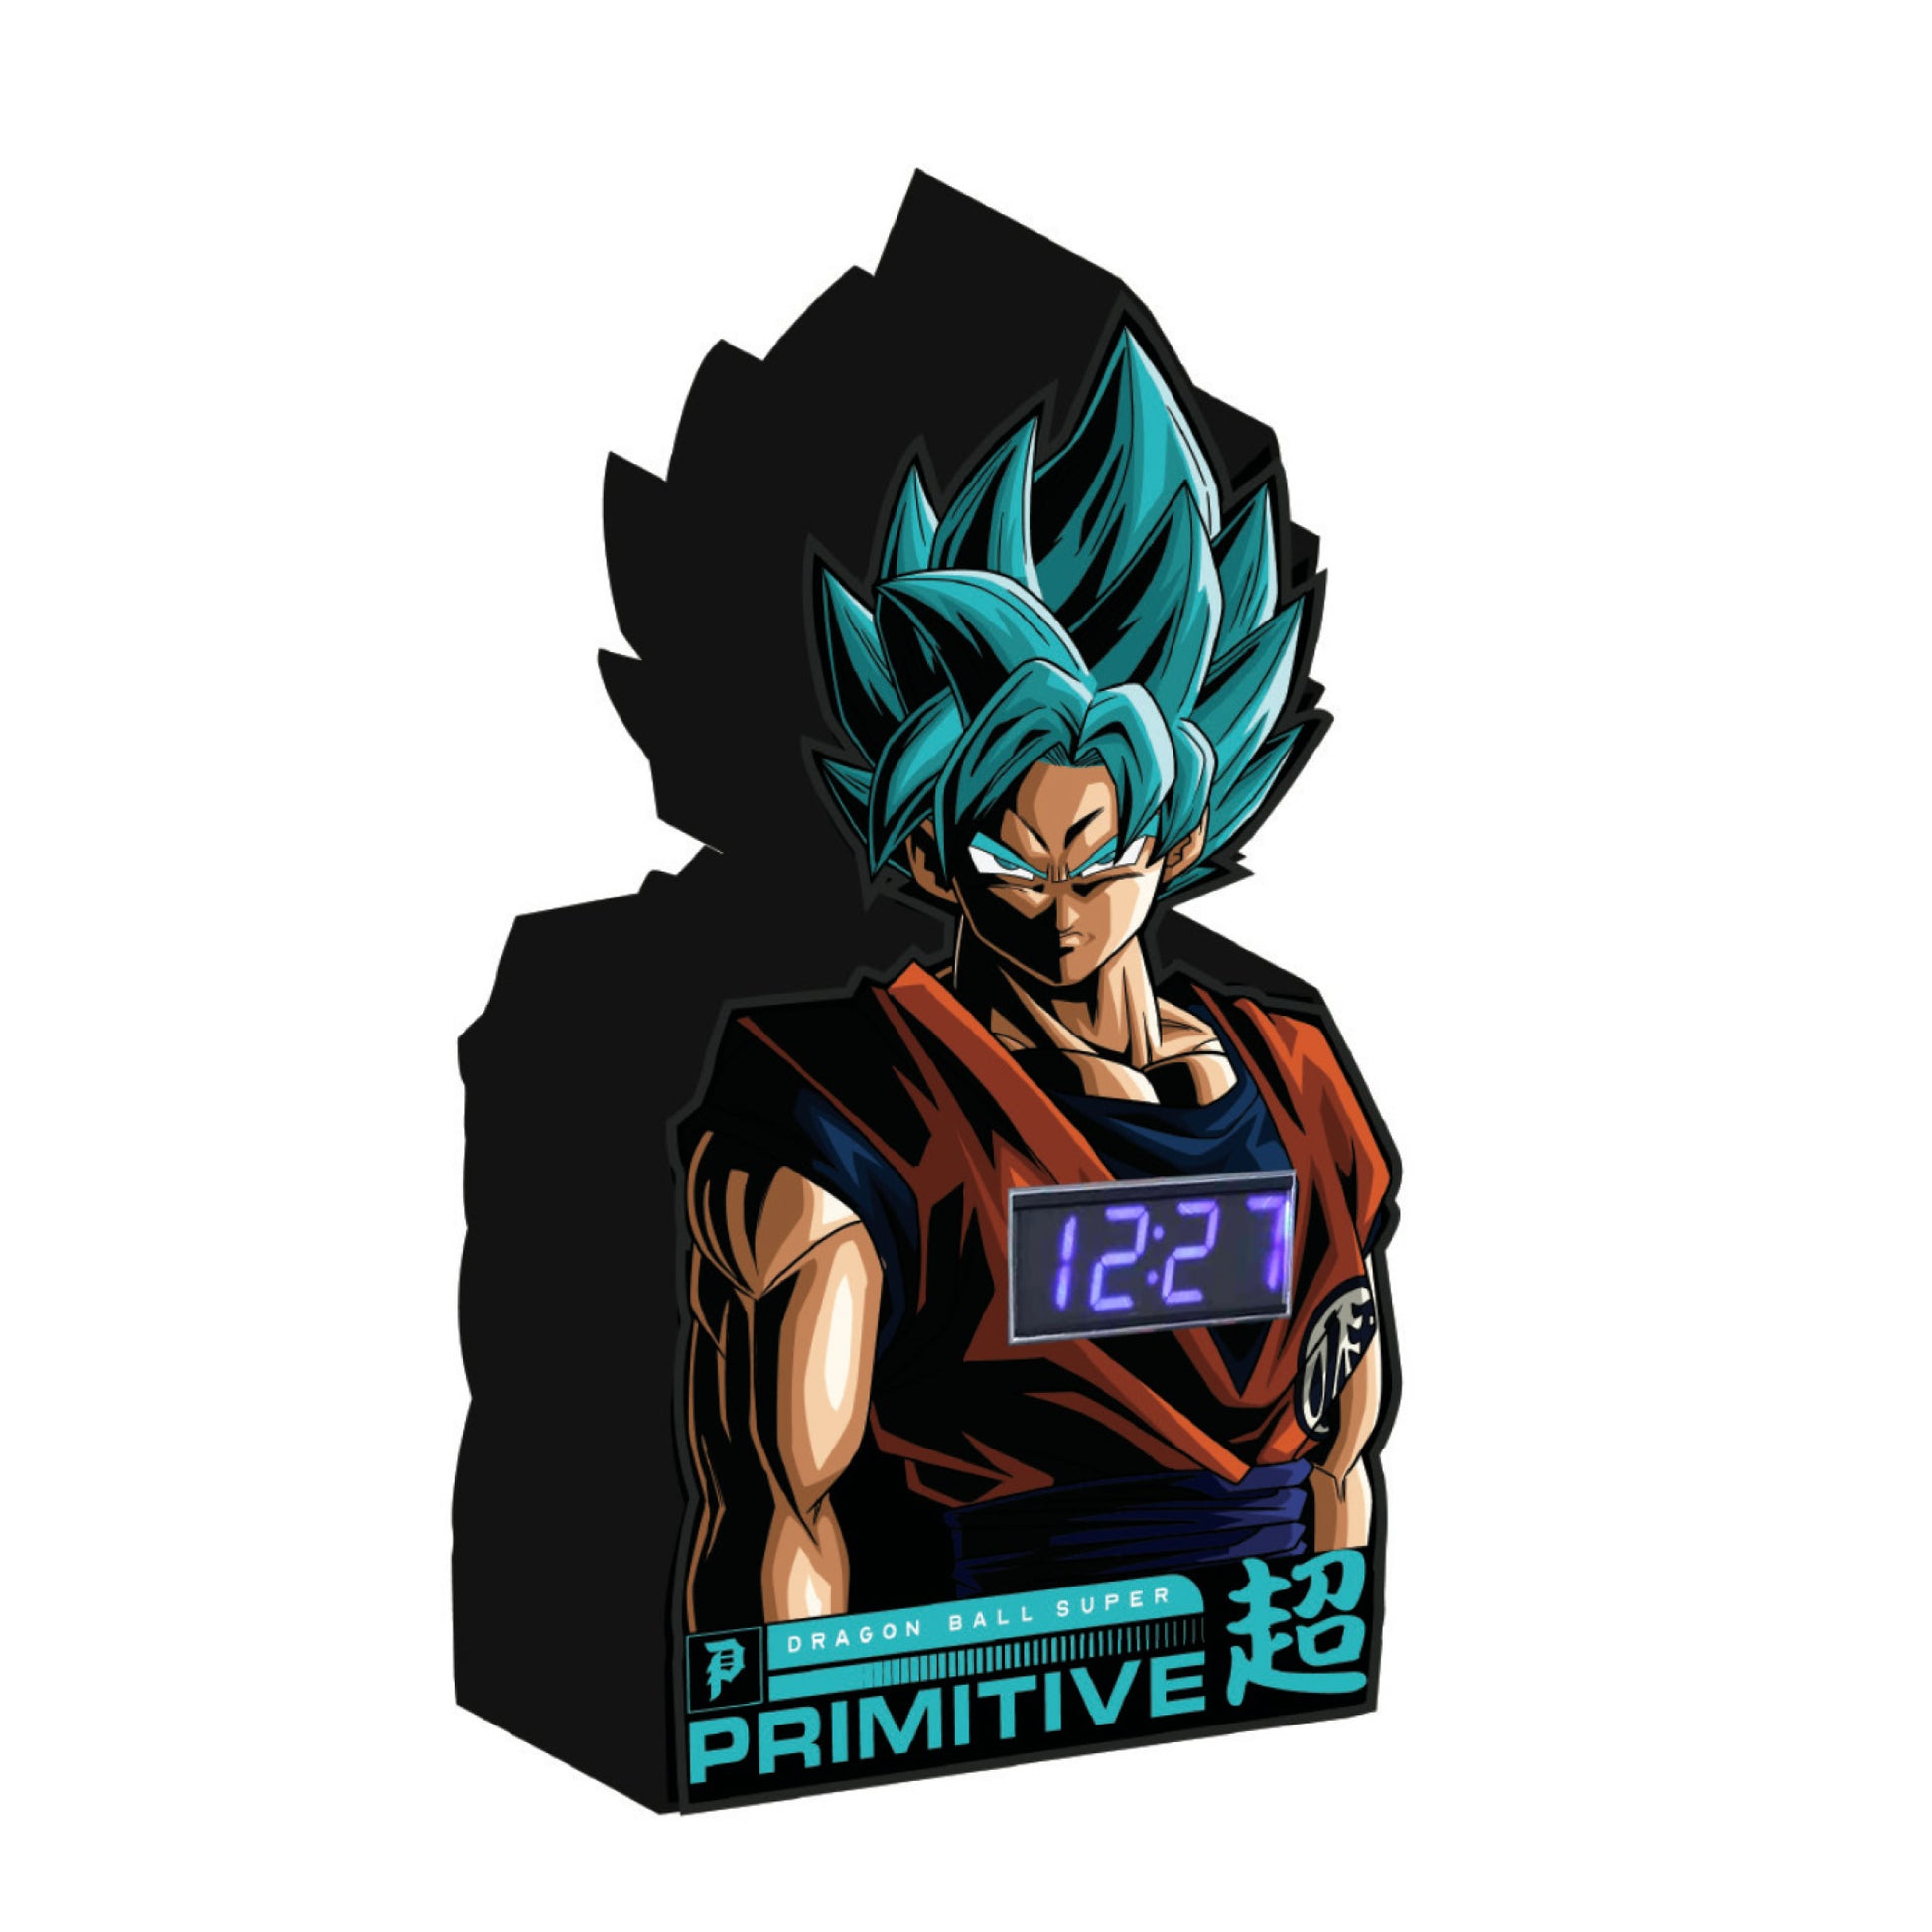 Primitive DBZ Super SSG Goku Digital Clock Black